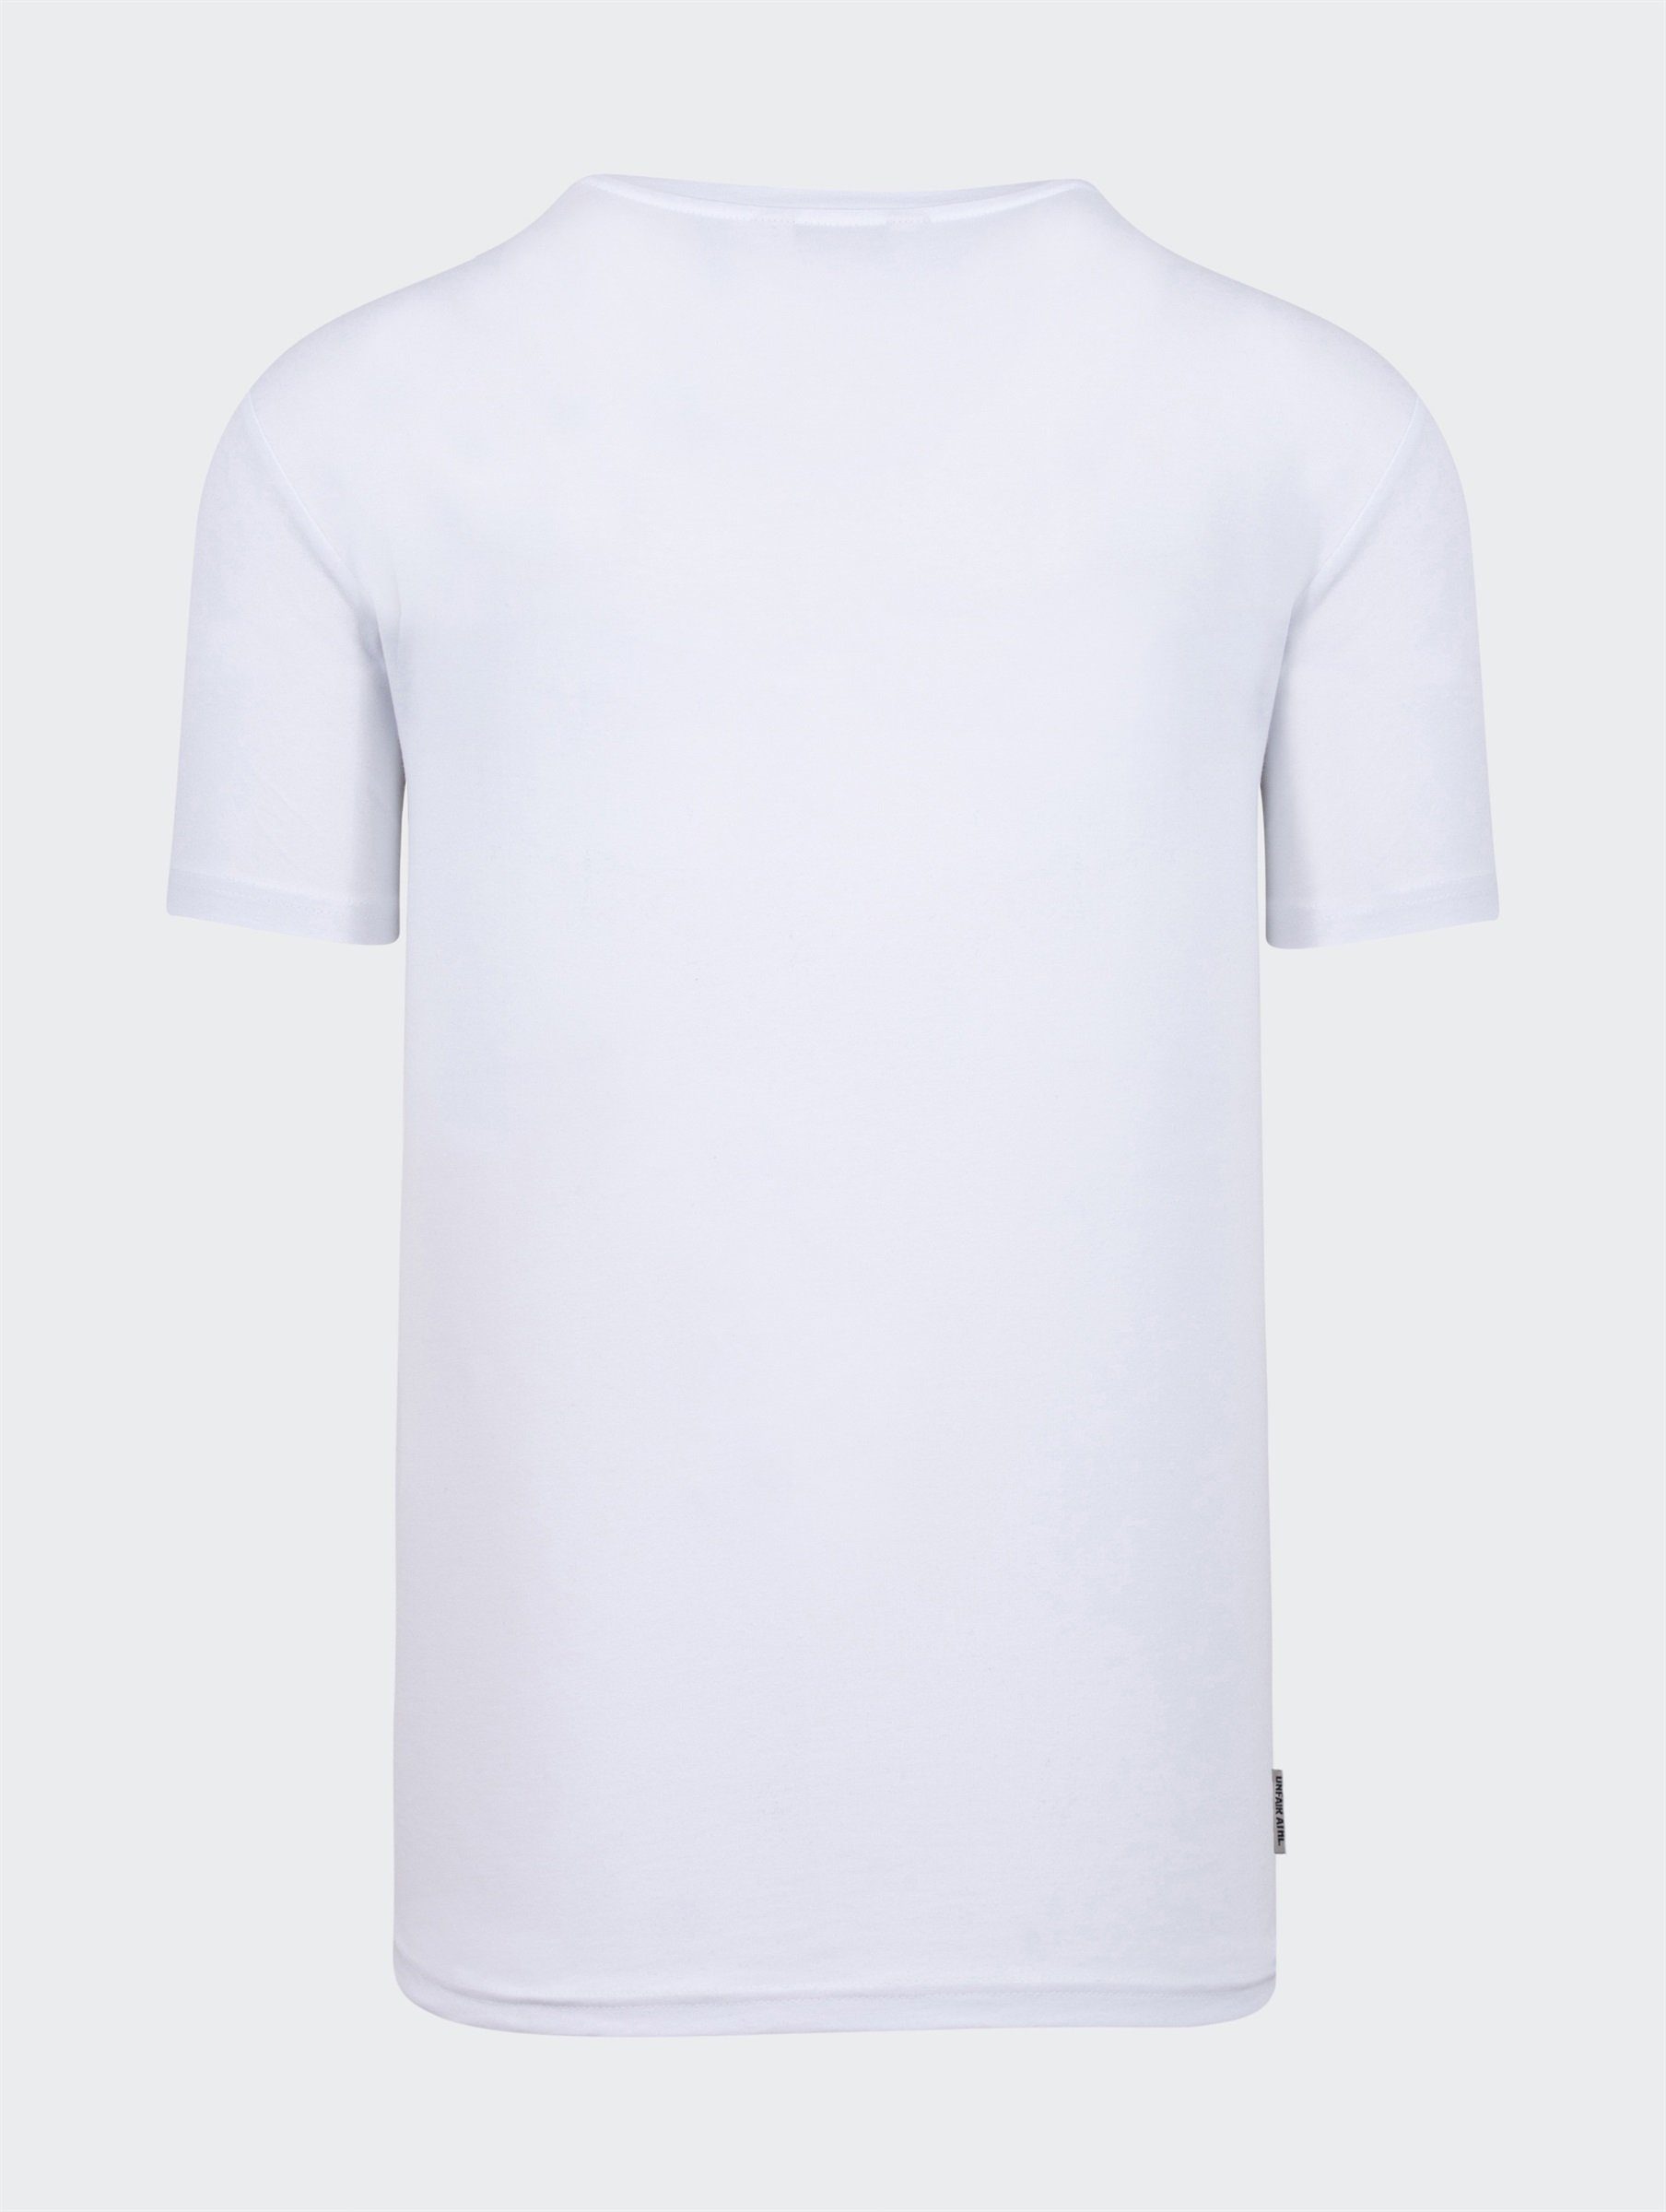 Unfair Athletics T-Shirt Unfair Herren Label Classic white 2021 T-Shirt Adult Athletics